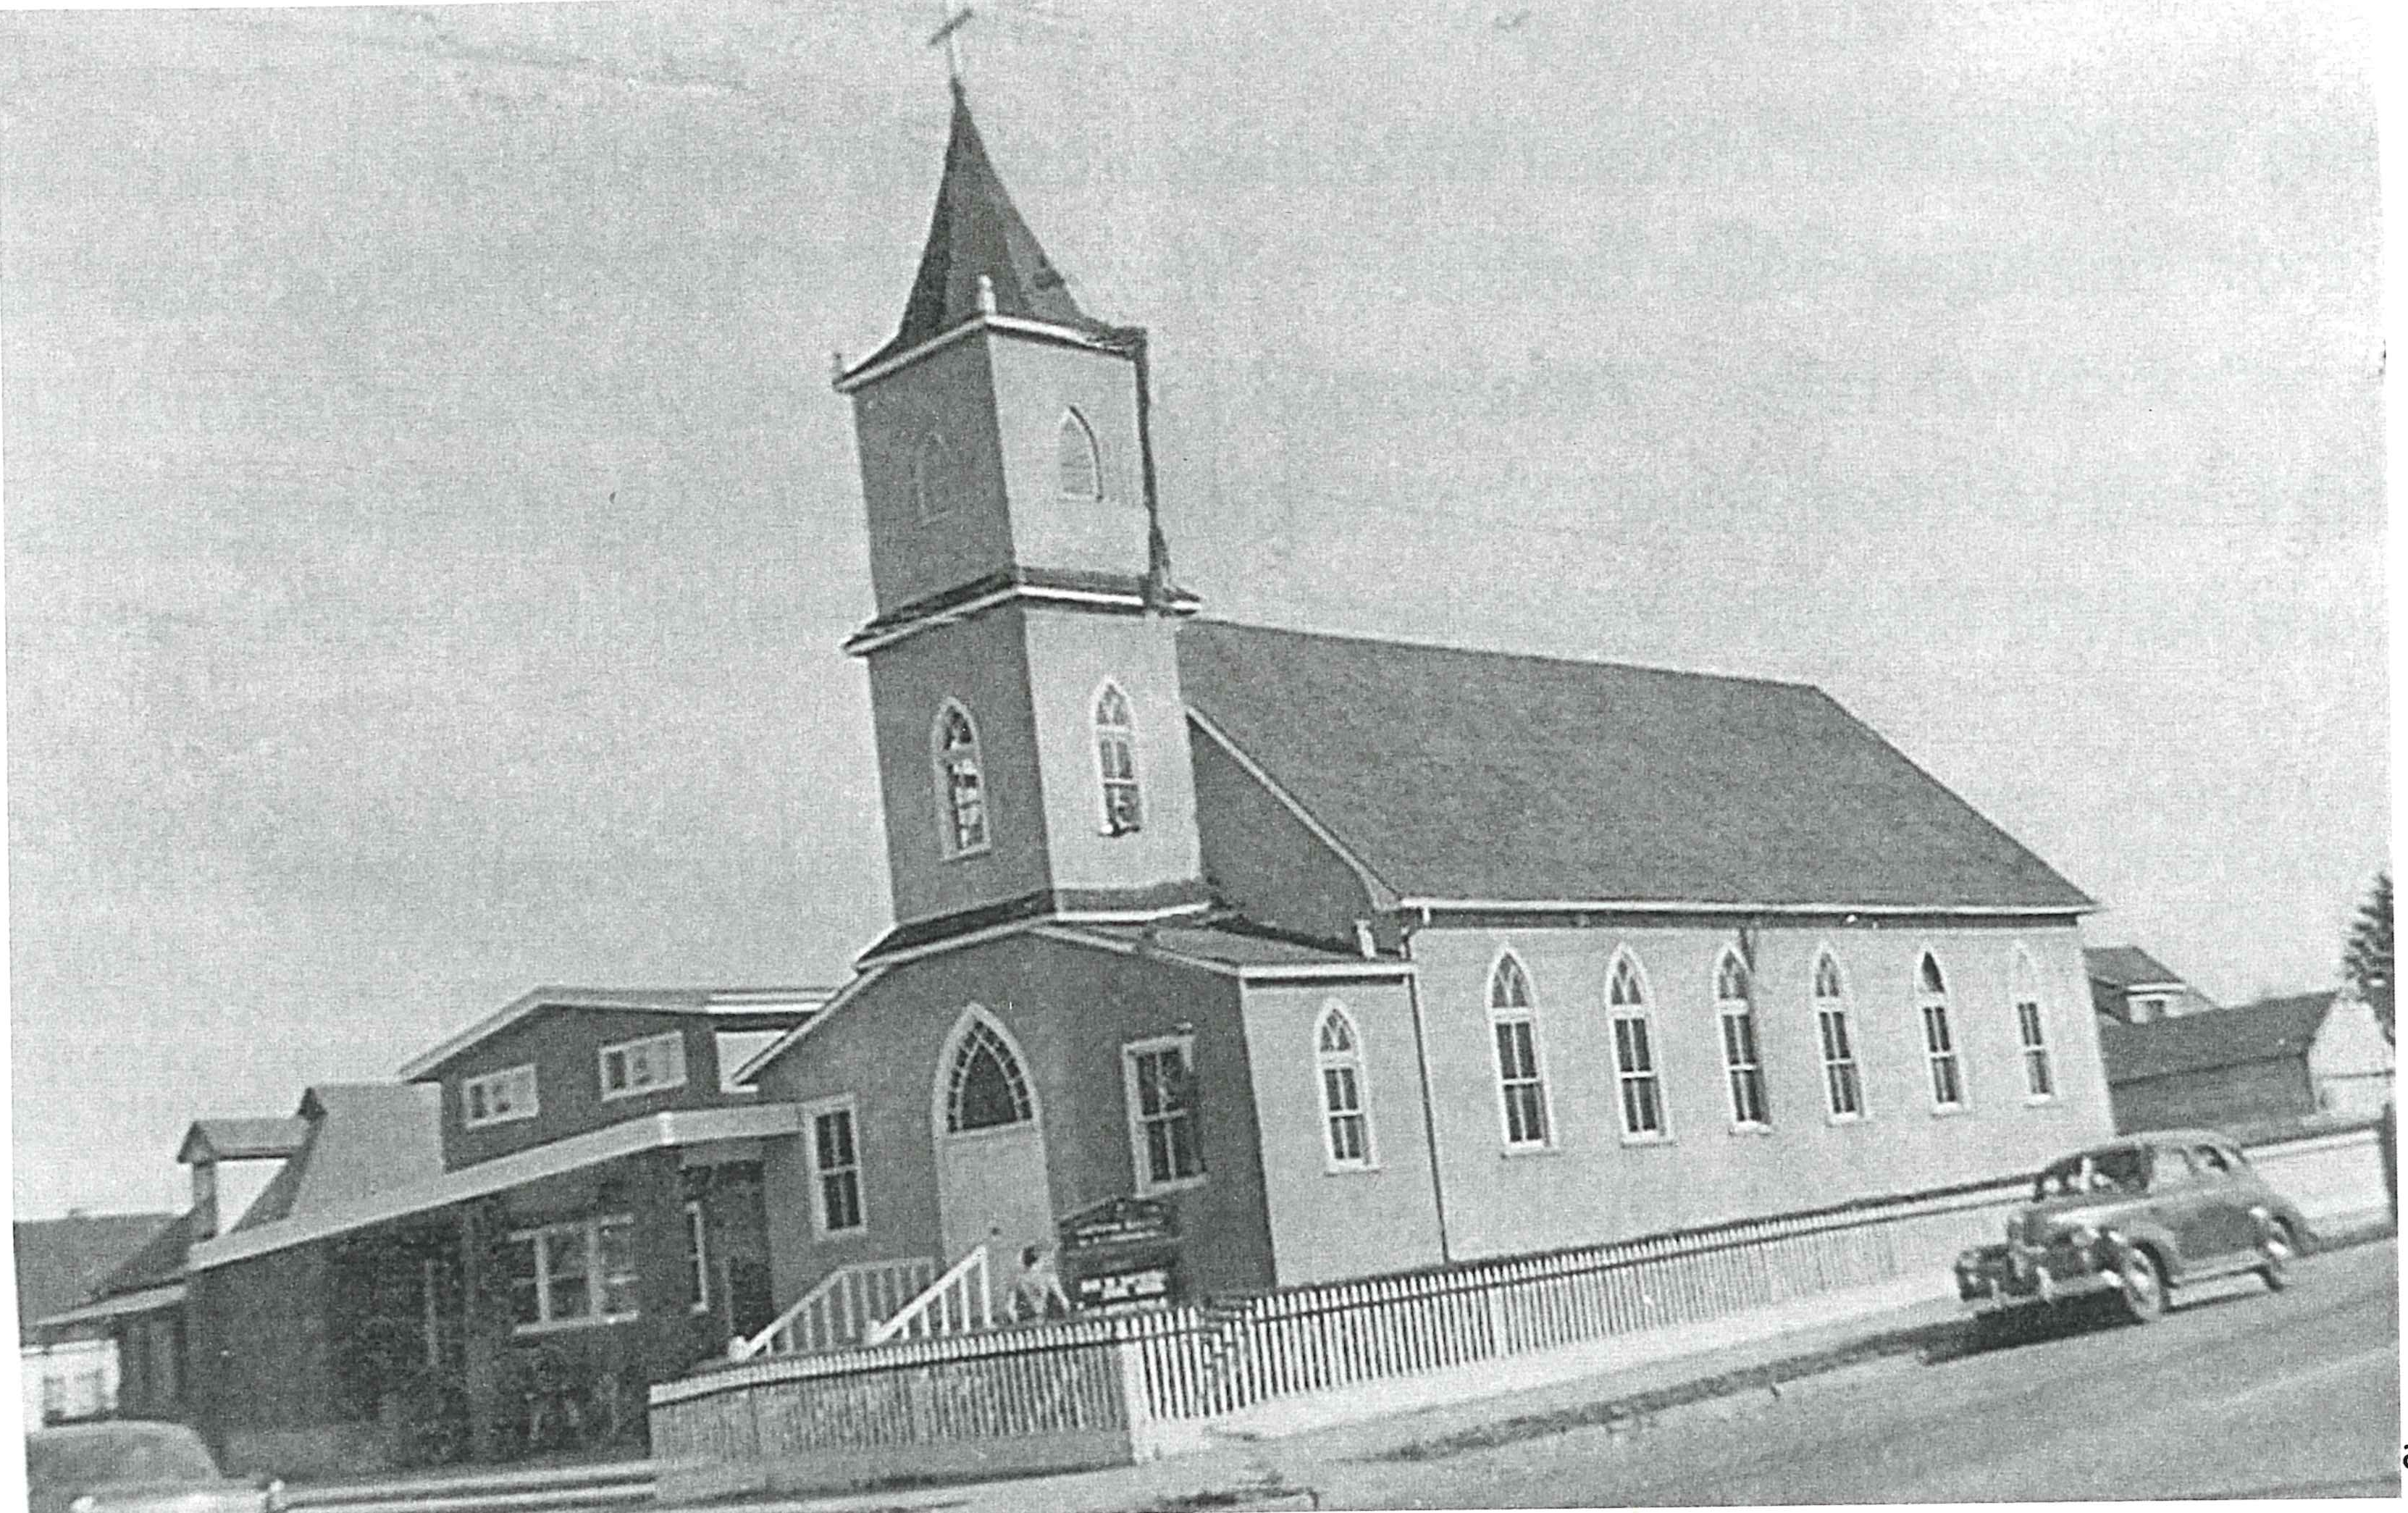 St. John Lutheran Church (1955) Calgary, Alberta Source: 100th Anniversary Book.